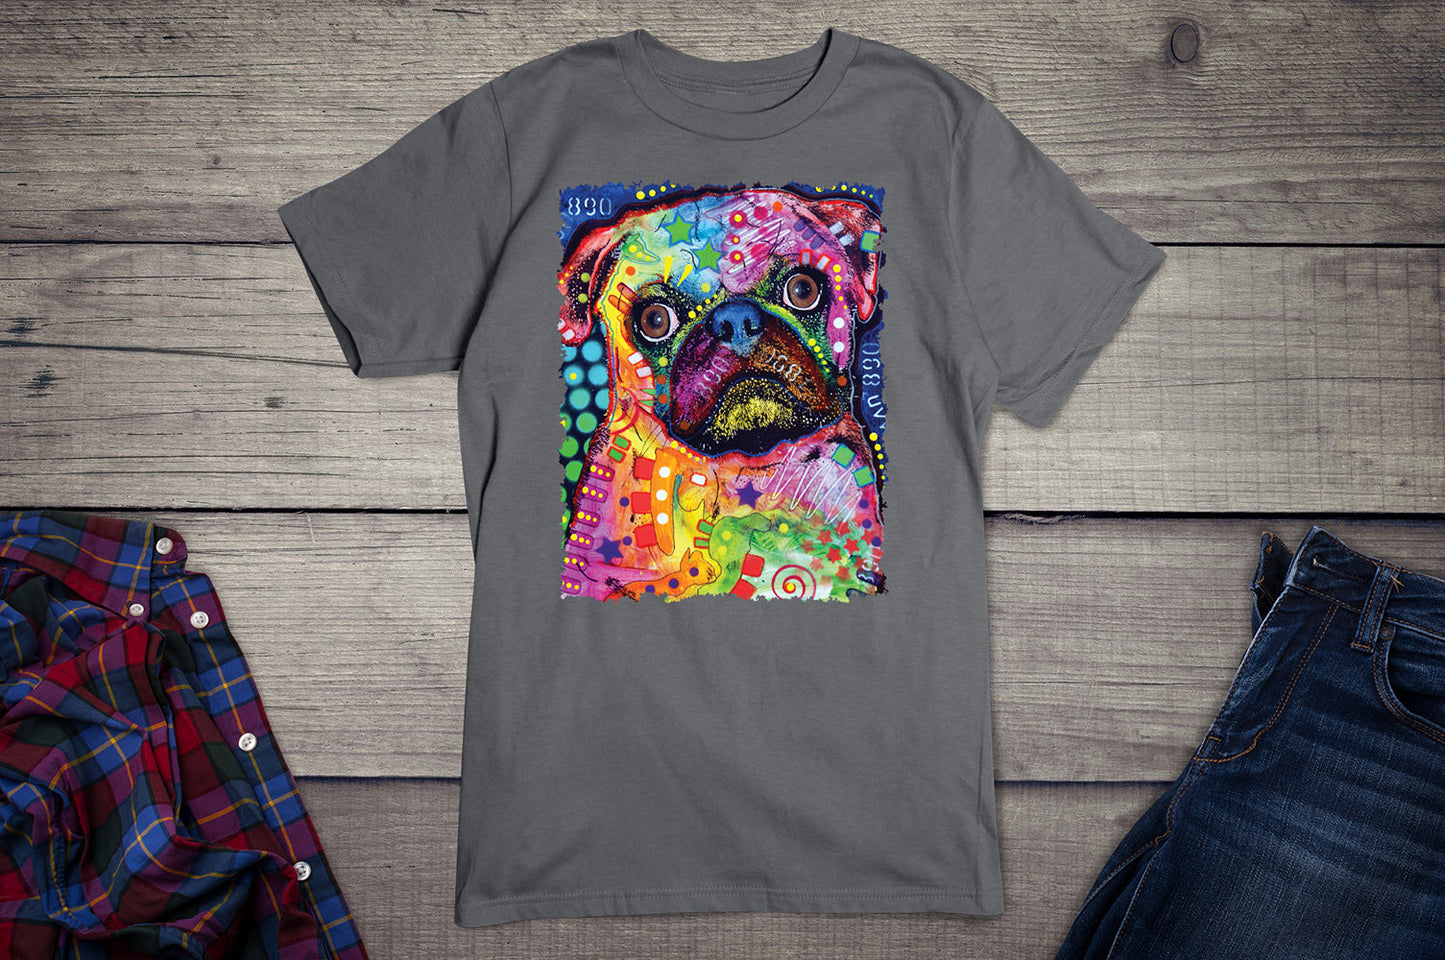 Neon Pug 2 T-shirt